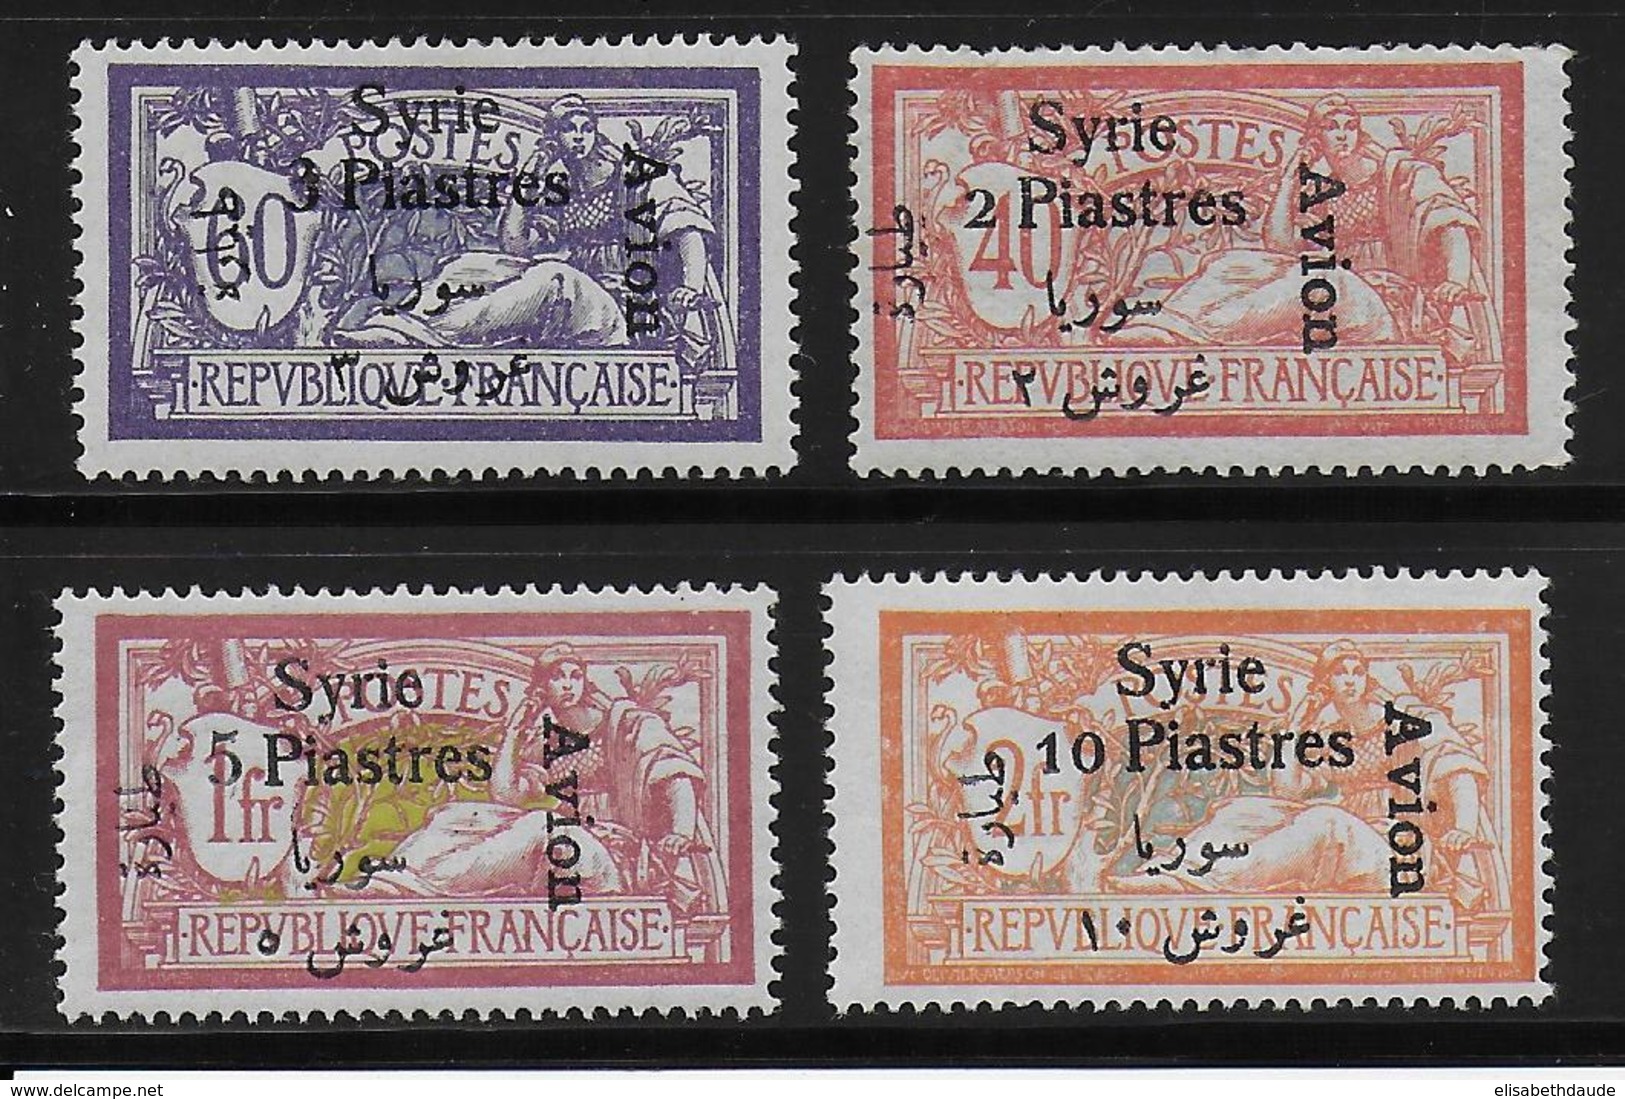 SYRIE - POSTE AERIENNE YVERT N° 22/25 *- COTE = 32 EUROS - CHARNIERES CORRECTES - Unused Stamps